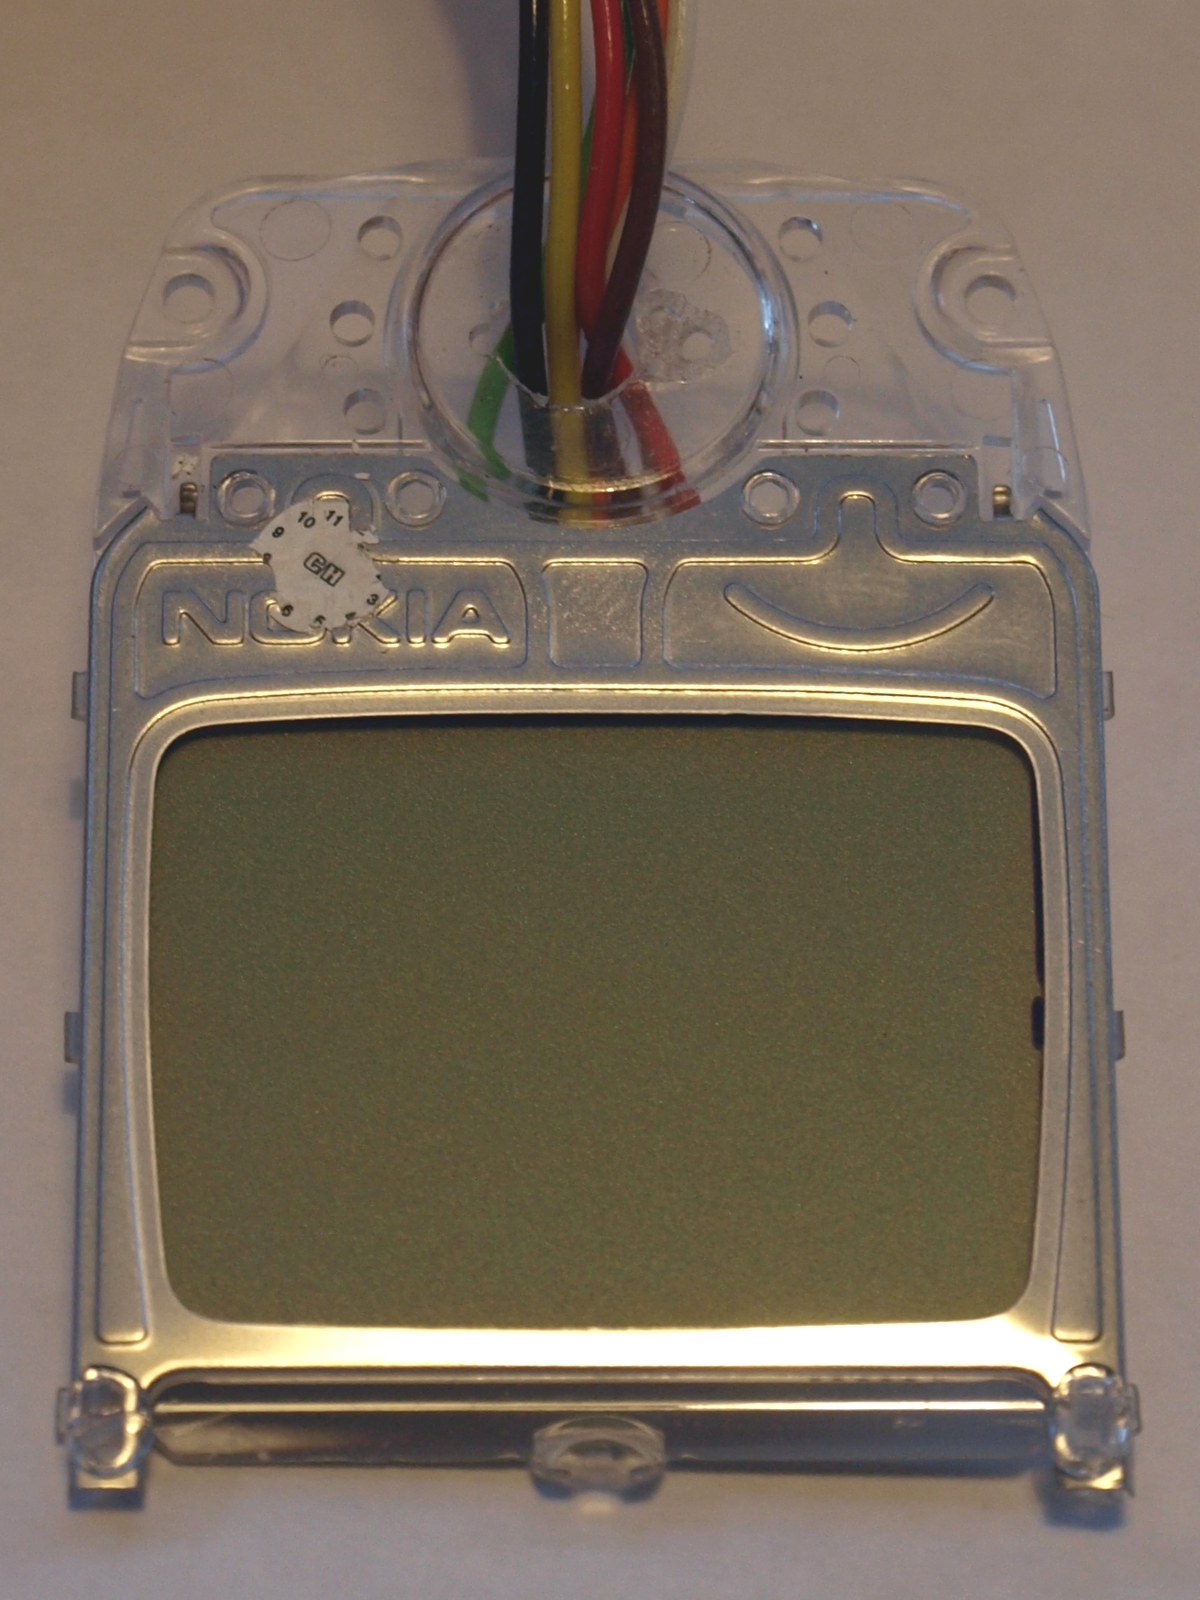 Nokia 3310 LCD